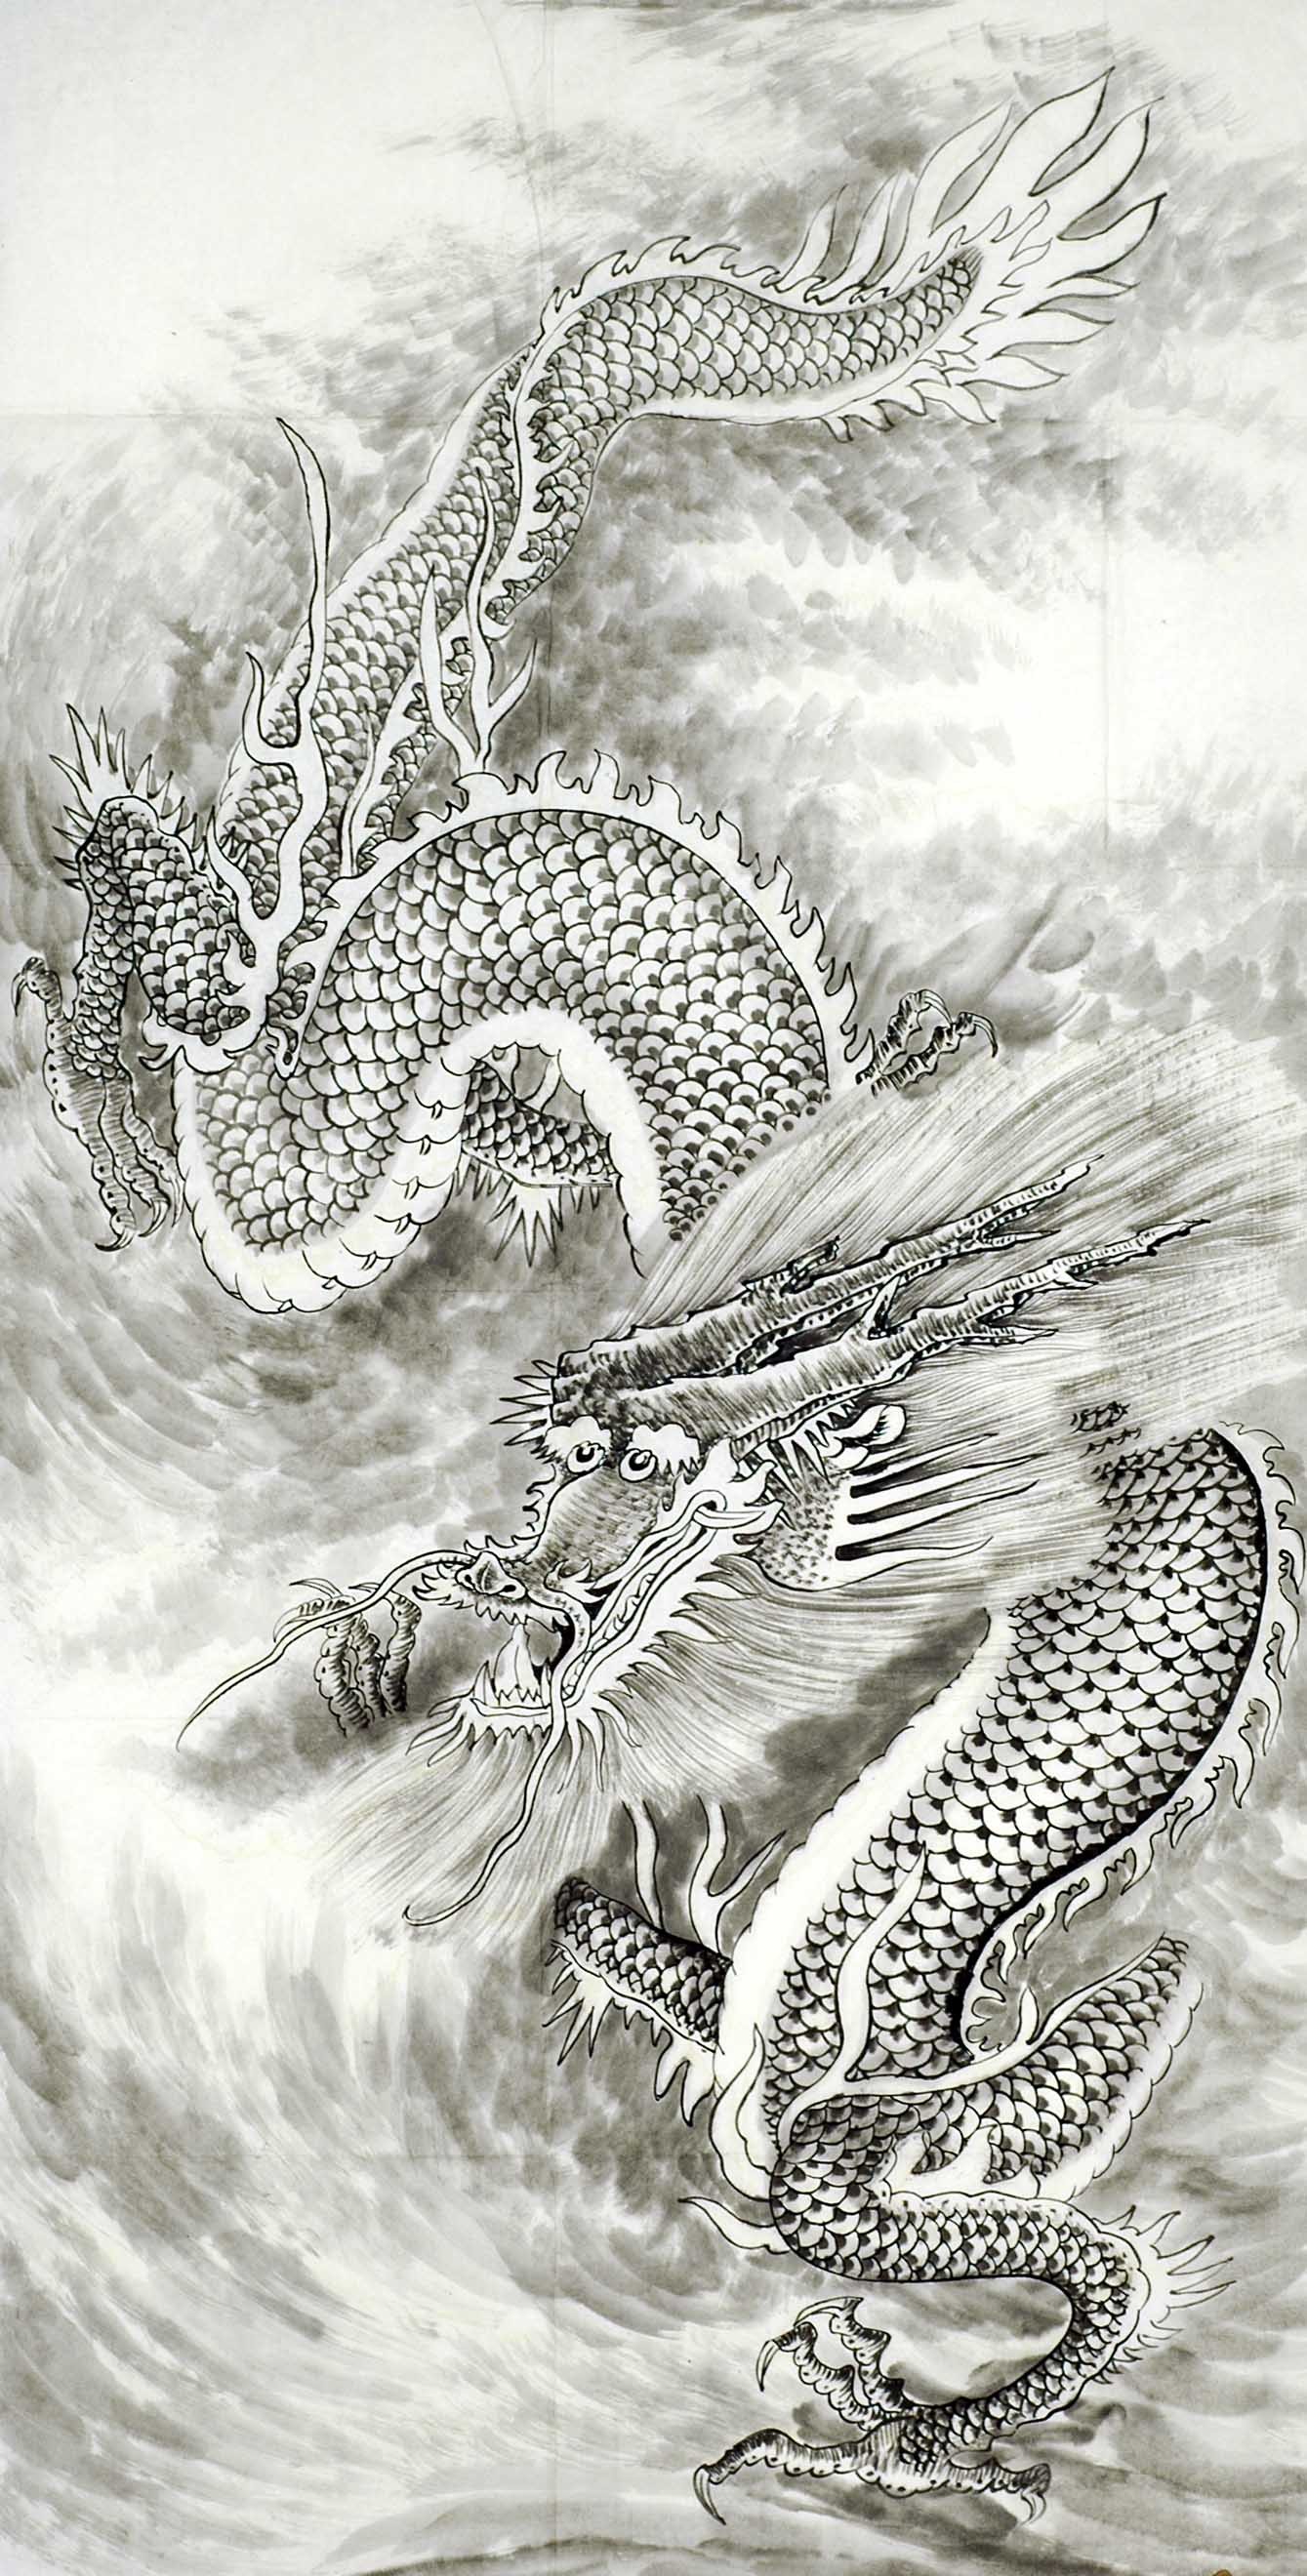 Chinese Dragon Painting - CNAG008718